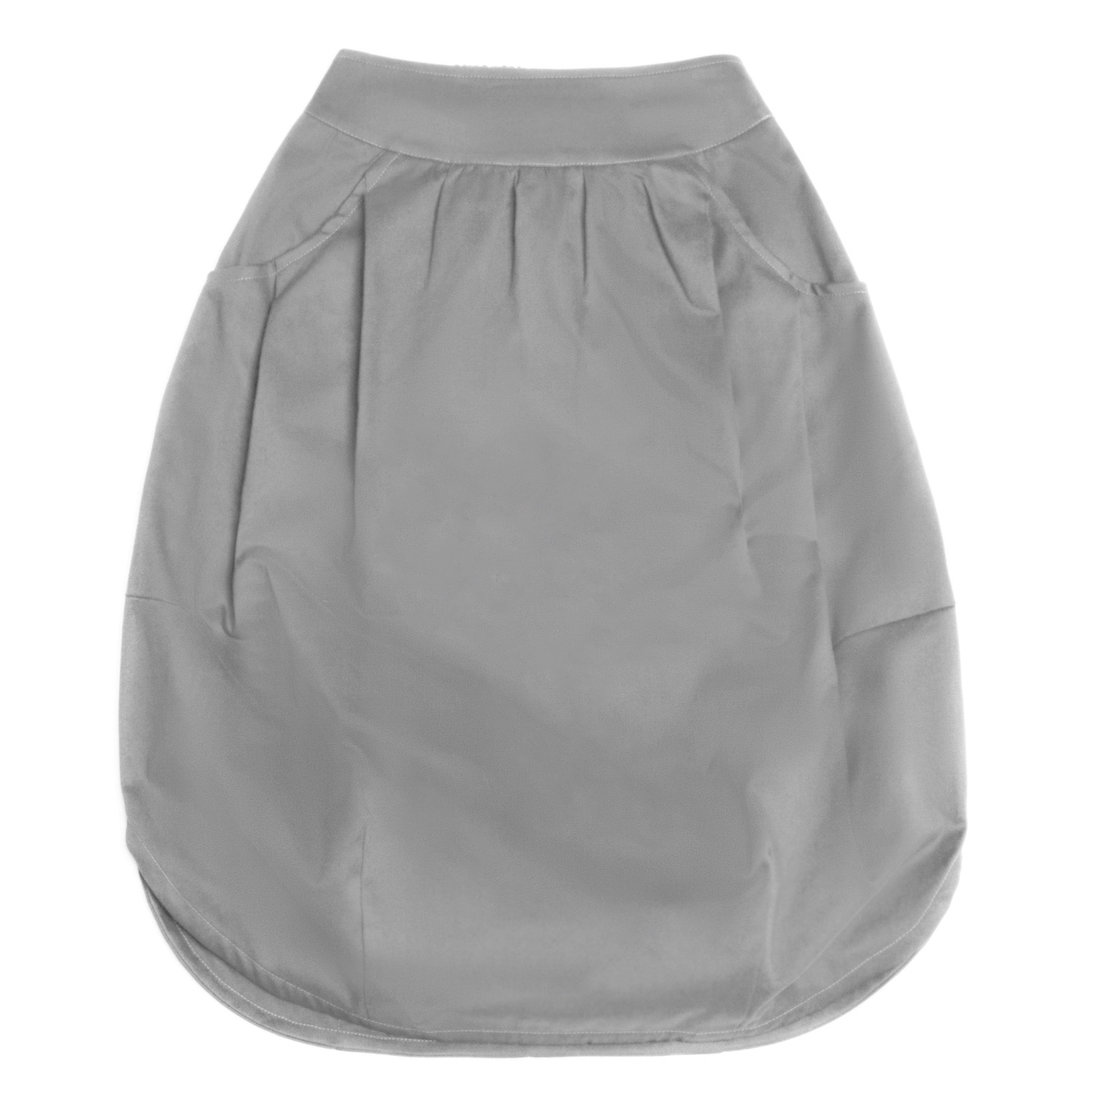 Взрослая юбка светло-серая (2018)